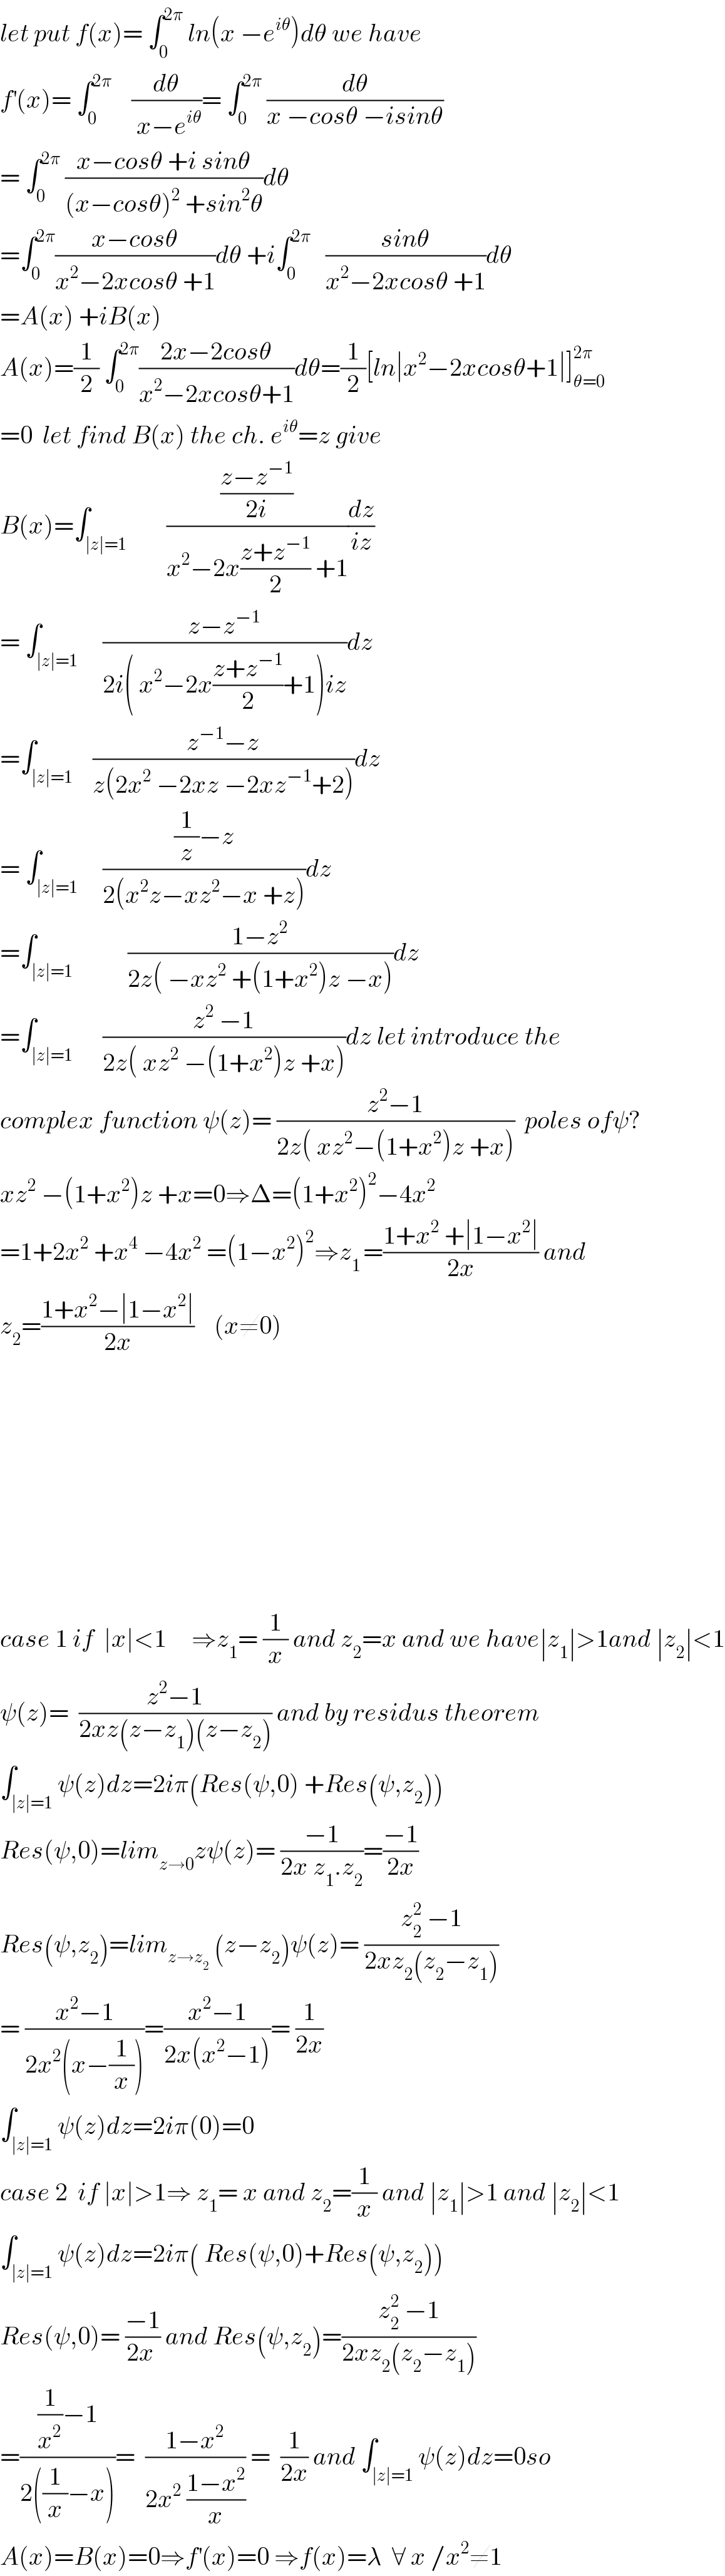 let put f(x)= ∫_0 ^(2π)  ln(x −e^(iθ) )dθ we have  f^′ (x)= ∫_0 ^(2π)     (dθ/( x−e^(iθ) ))= ∫_0 ^(2π)  (dθ/(x −cosθ −isinθ))  = ∫_0 ^(2π)  ((x−cosθ +i sinθ)/((x−cosθ)^2  +sin^2 θ))dθ  =∫_0 ^(2π) ((x−cosθ)/(x^2 −2xcosθ +1))dθ +i∫_0 ^(2π)    ((sinθ)/(x^2 −2xcosθ +1))dθ  =A(x) +iB(x)  A(x)=(1/2) ∫_0 ^(2π) ((2x−2cosθ)/(x^2 −2xcosθ+1))dθ=(1/2)[ln∣x^2 −2xcosθ+1∣]_(θ=0) ^(2π)   =0  let find B(x) the ch. e^(iθ) =z give  B(x)=∫_(∣z∣=1)        (((z−z^(−1) )/(2i))/(x^2 −2x((z+z^(−1) )/2) +1))(dz/(iz))  = ∫_(∣z∣=1)     ((z−z^(−1) )/(2i( x^2 −2x((z+z^(−1) )/2)+1)iz))dz  =∫_(∣z∣=1)    ((z^(−1) −z)/(z(2x^2  −2xz −2xz^(−1) +2)))dz  = ∫_(∣z∣=1)     (((1/z)−z)/(2(x^2 z−xz^2 −x +z)))dz  =∫_(∣z∣=1)           ((1−z^2 )/(2z( −xz^2  +(1+x^2 )z −x)))dz  =∫_(∣z∣=1)      ((z^2  −1)/(2z( xz^2  −(1+x^2 )z +x)))dz let introduce the  complex function ψ(z)= ((z^2 −1)/(2z( xz^2 −(1+x^2 )z +x)))  poles ofψ?  xz^2  −(1+x^2 )z +x=0⇒Δ=(1+x^2 )^2 −4x^2   =1+2x^2  +x^4  −4x^2  =(1−x^2 )^2 ⇒z_(1 ) =((1+x^2  +∣1−x^2 ∣)/(2x)) and  z_2 =((1+x^2 −∣1−x^2 ∣)/(2x))    (x≠0)                case 1 if  ∣x∣<1     ⇒z_1 = (1/x) and z_2 =x and we have∣z_1 ∣>1and ∣z_2 ∣<1  ψ(z)=  ((z^2 −1)/(2xz(z−z_1 )(z−z_2 ))) and by residus theorem  ∫_(∣z∣=1) ψ(z)dz=2iπ(Res(ψ,0) +Res(ψ,z_2 ))  Res(ψ,0)=lim_(z→0) zψ(z)= ((−1)/(2x z_1 .z_2 ))=((−1)/(2x))  Res(ψ,z_2 )=lim_(z→z_2 )  (z−z_2 )ψ(z)= ((z_2 ^2  −1)/(2xz_2 (z_2 −z_1 )))  = ((x^2 −1)/(2x^2 (x−(1/x))))=((x^2 −1)/(2x(x^2 −1)))= (1/(2x))  ∫_(∣z∣=1) ψ(z)dz=2iπ(0)=0  case 2  if ∣x∣>1⇒ z_1 = x and z_2 =(1/x) and ∣z_1 ∣>1 and ∣z_2 ∣<1  ∫_(∣z∣=1) ψ(z)dz=2iπ( Res(ψ,0)+Res(ψ,z_2 ))  Res(ψ,0)= ((−1)/(2x )) and Res(ψ,z_2 )=((z_2 ^2  −1)/(2xz_2 (z_2 −z_1 )))  =(((1/x^2 )−1)/(2((1/x)−x)))=  ((1−x^2 )/(2x^2  ((1−x^2 )/x))) =  (1/(2x)) and ∫_(∣z∣=1) ψ(z)dz=0so  A(x)=B(x)=0⇒f^′ (x)=0 ⇒f(x)=λ  ∀ x /x^2 ≠1  